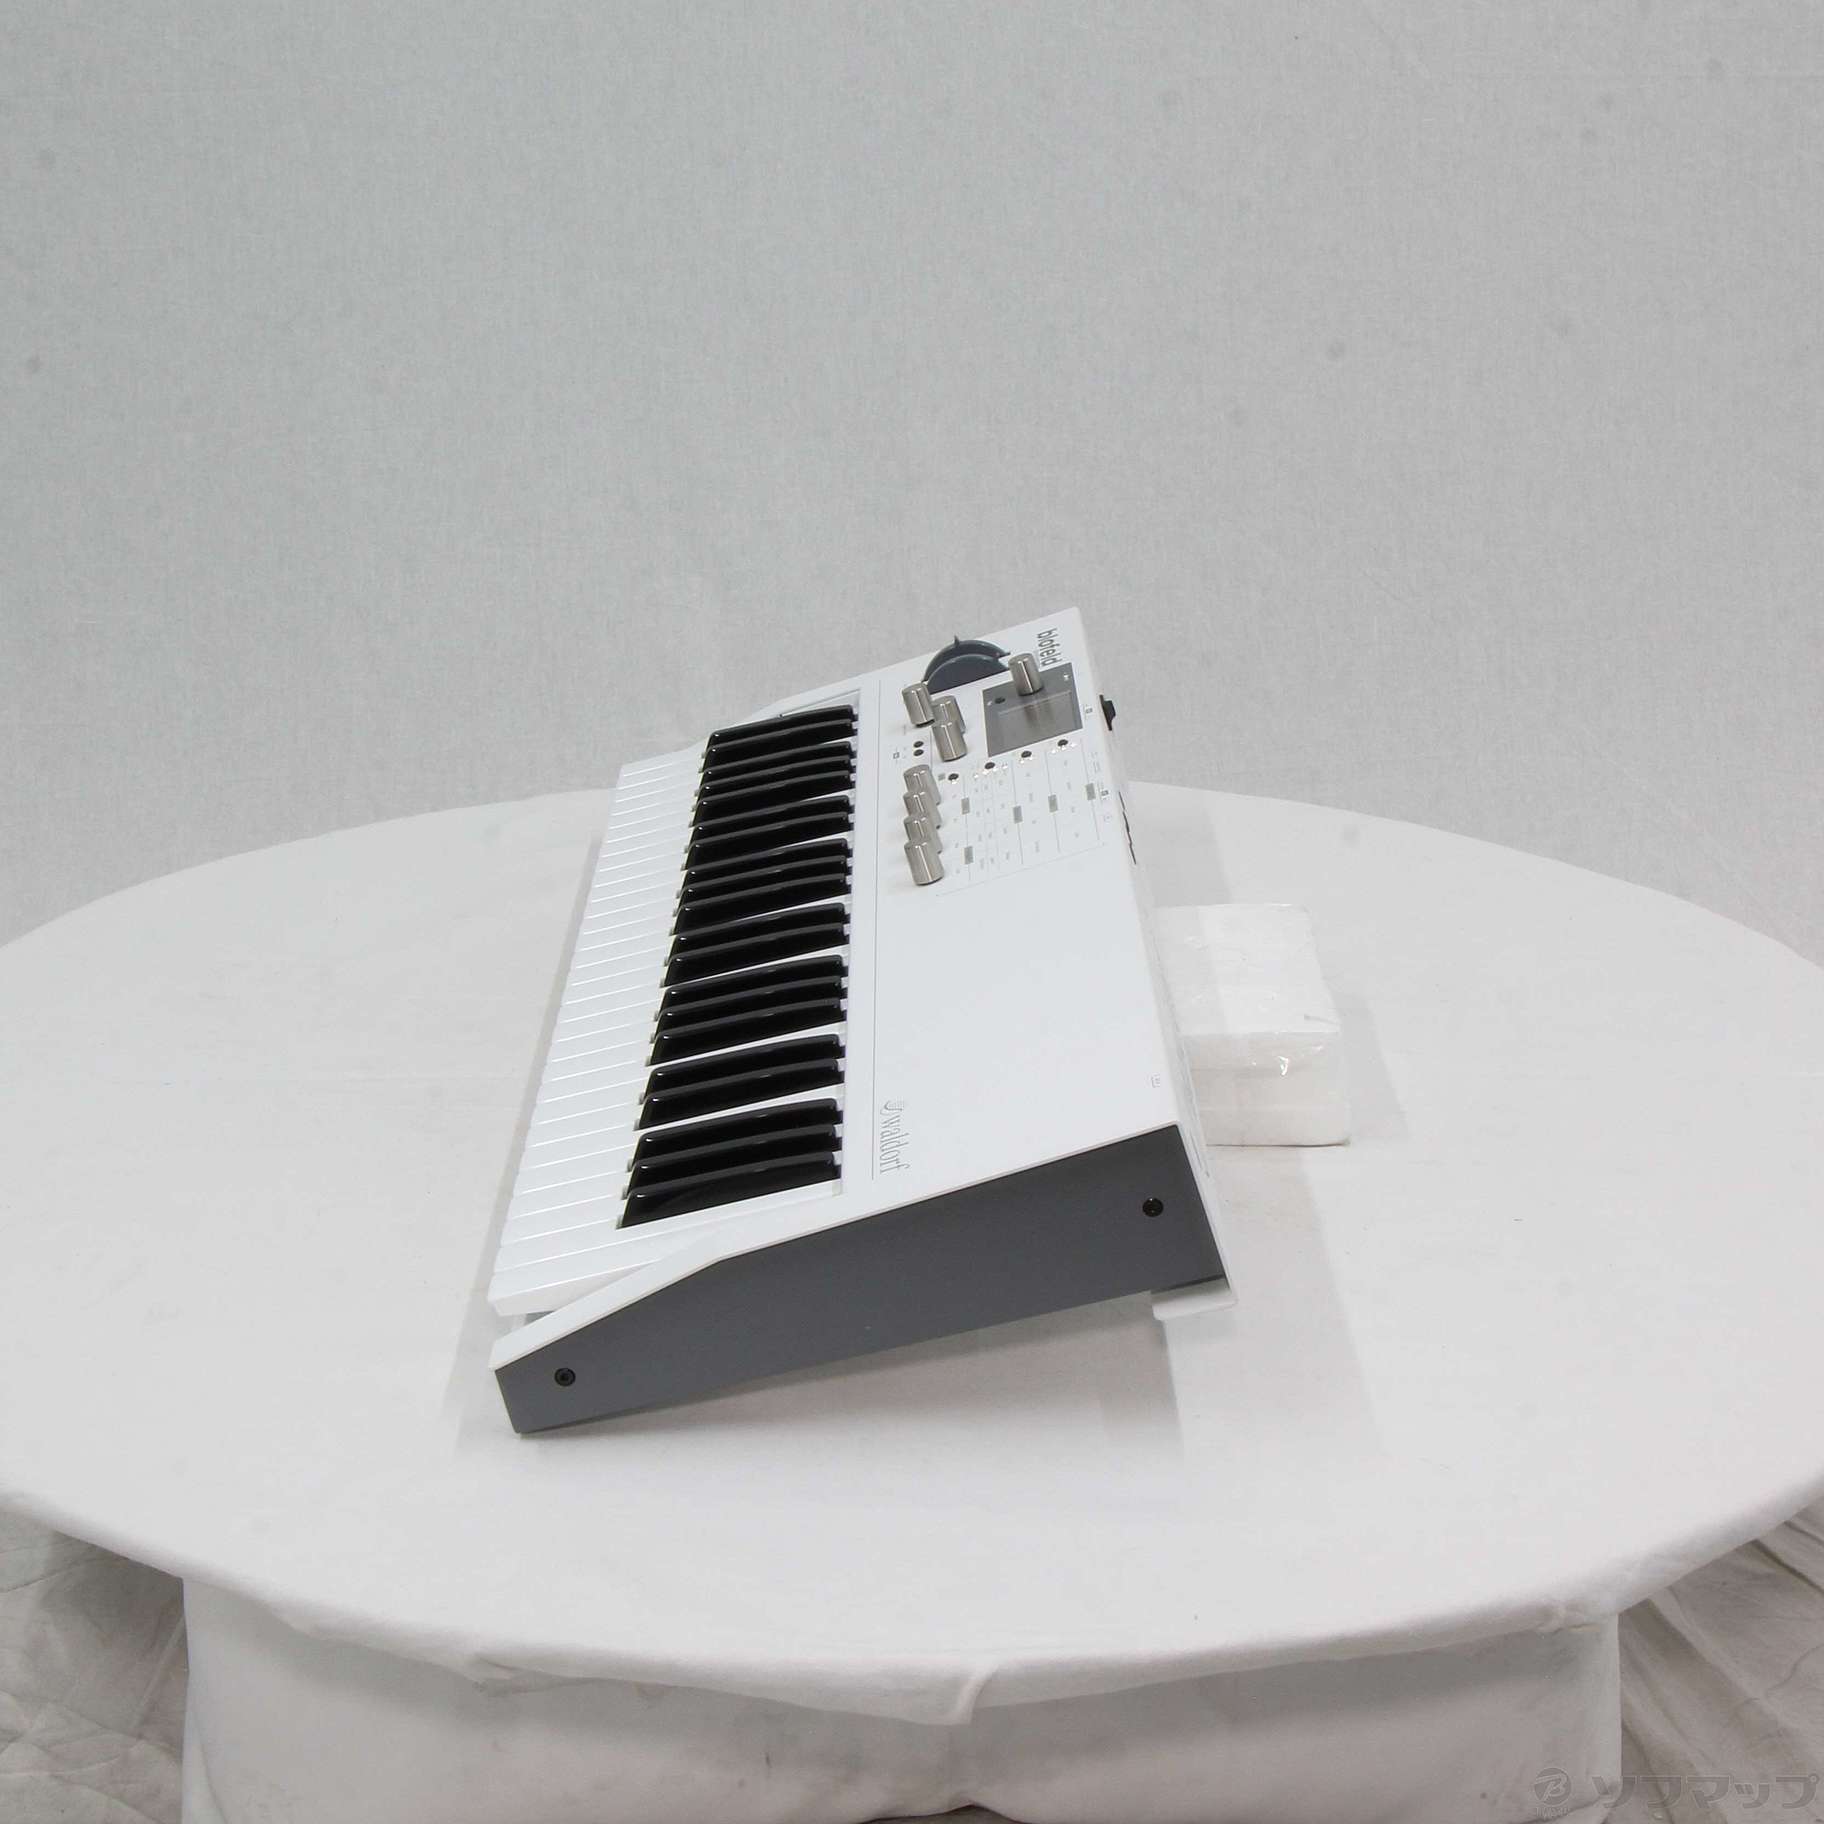 Blofeld Keyboard